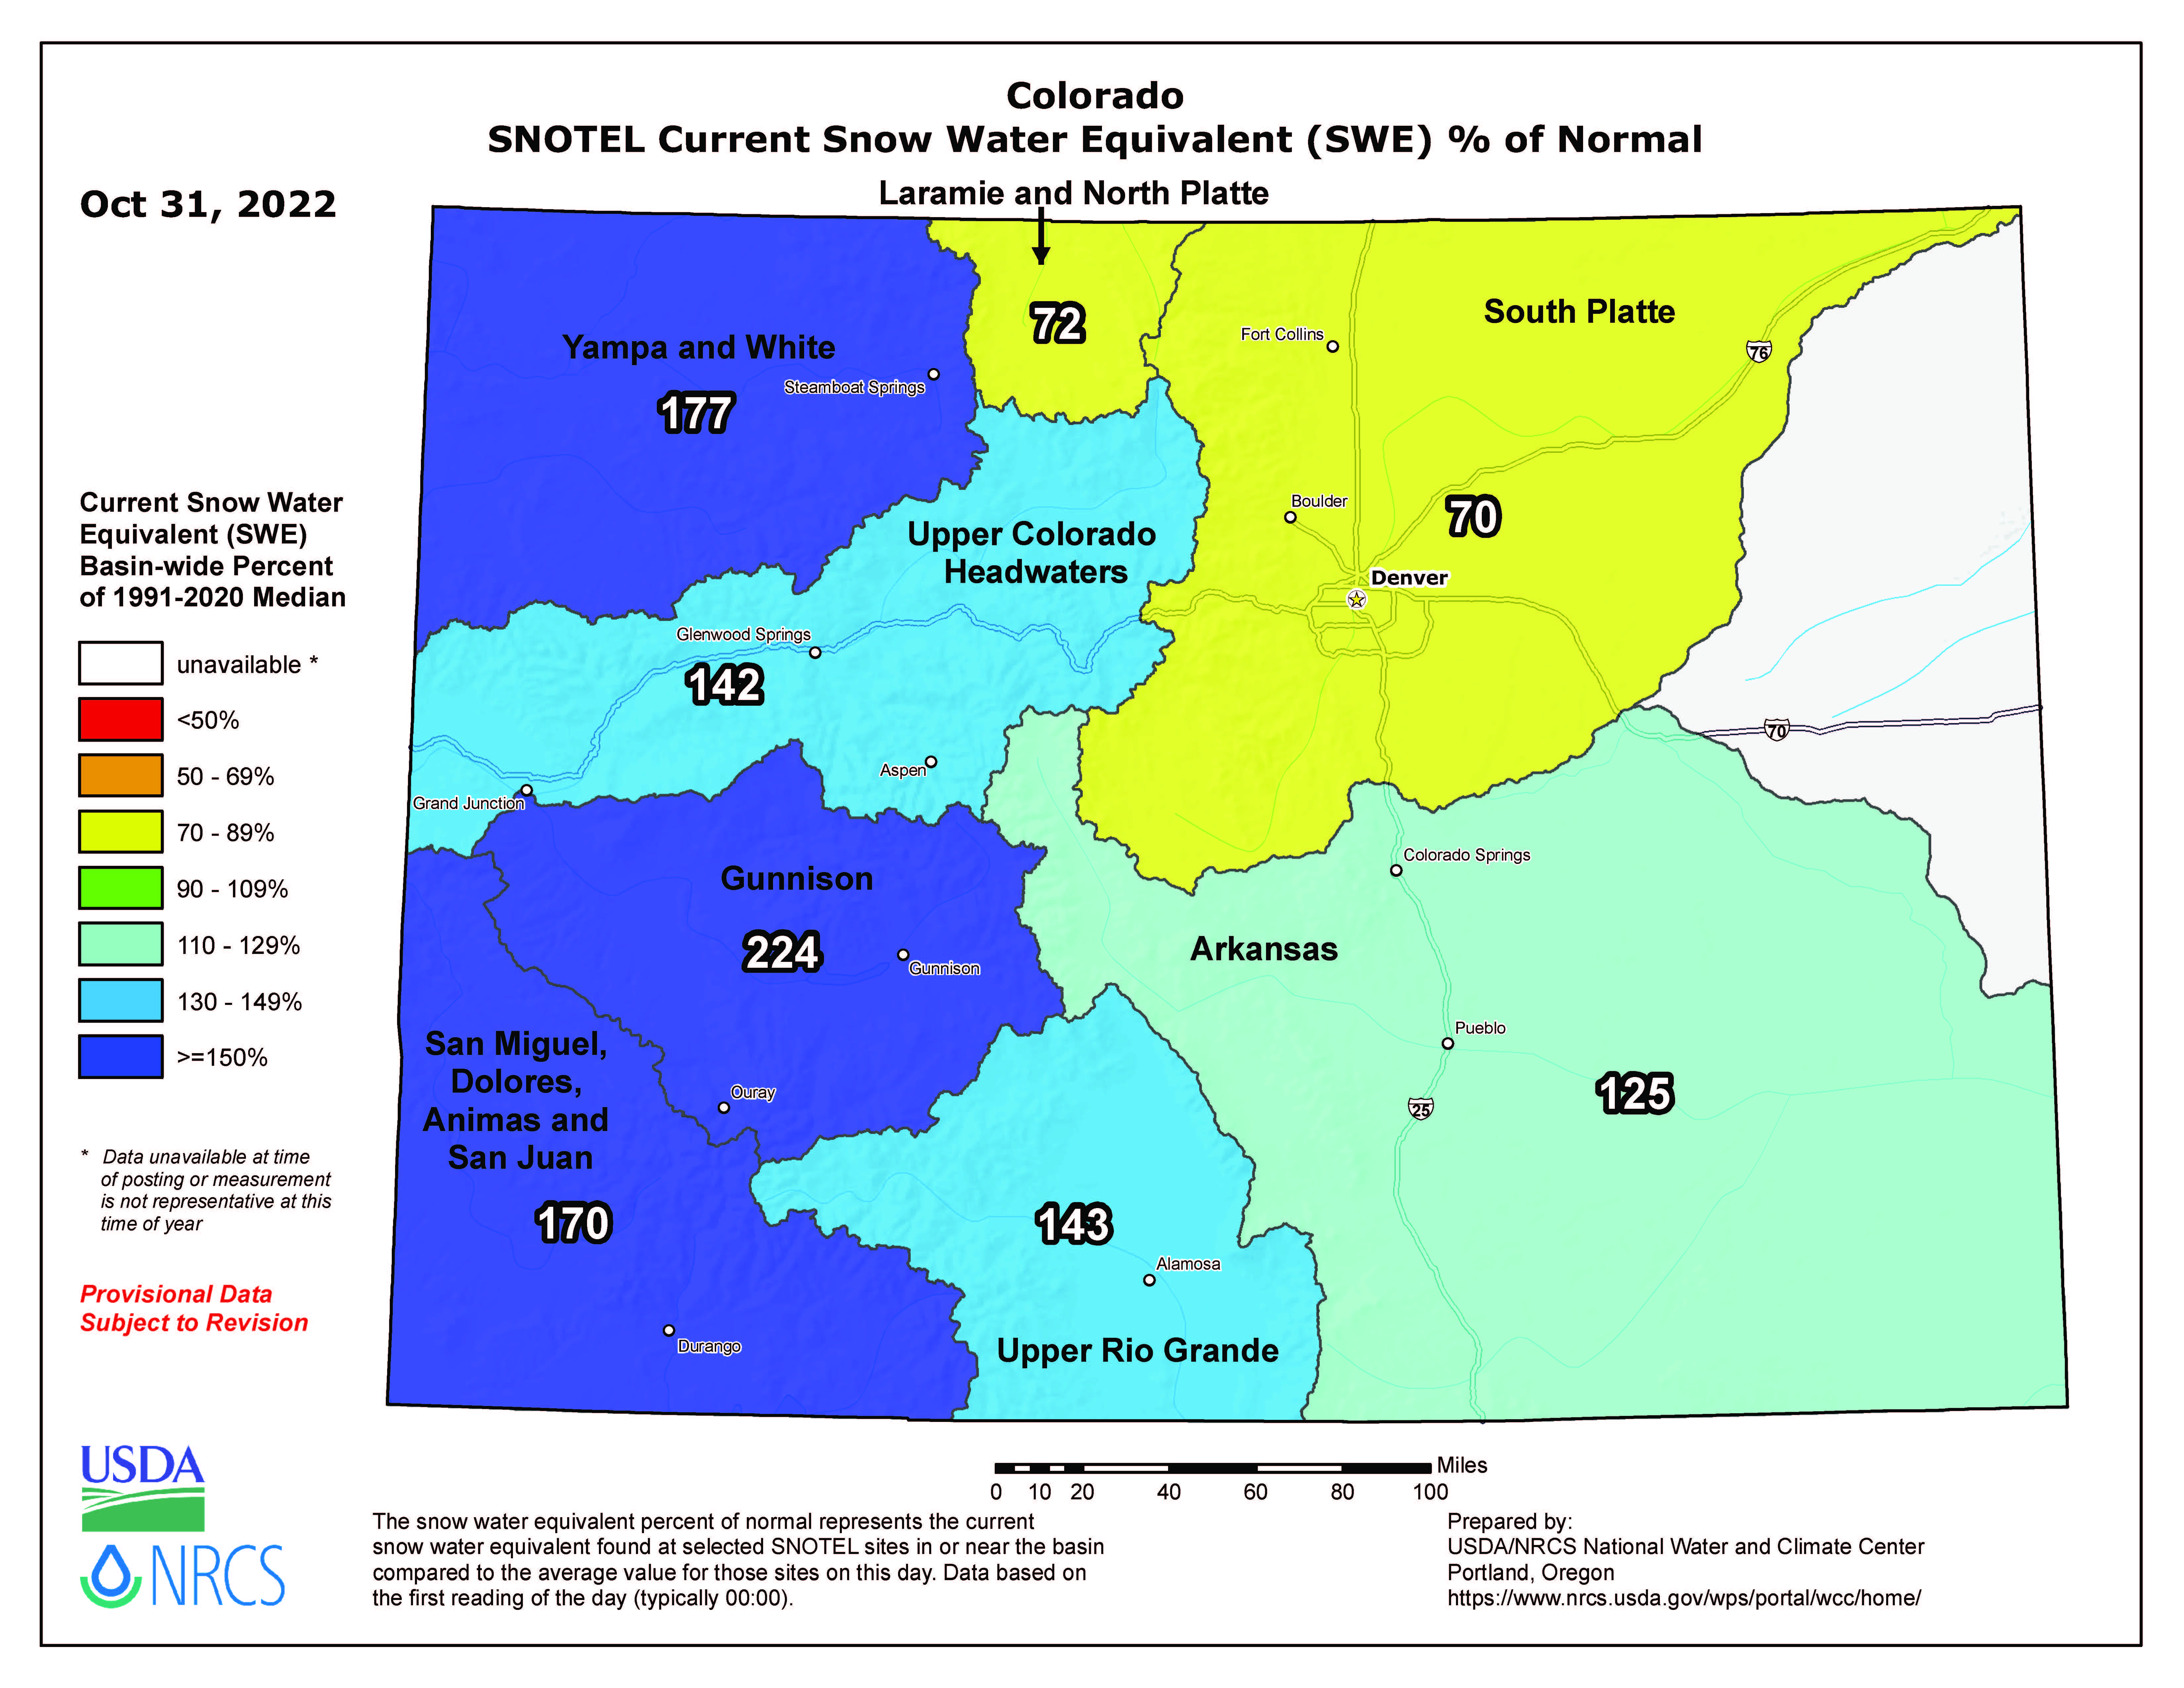 MAP Colorado Snow Water Equivalent for October 31, 2022 - USDA-NRCS